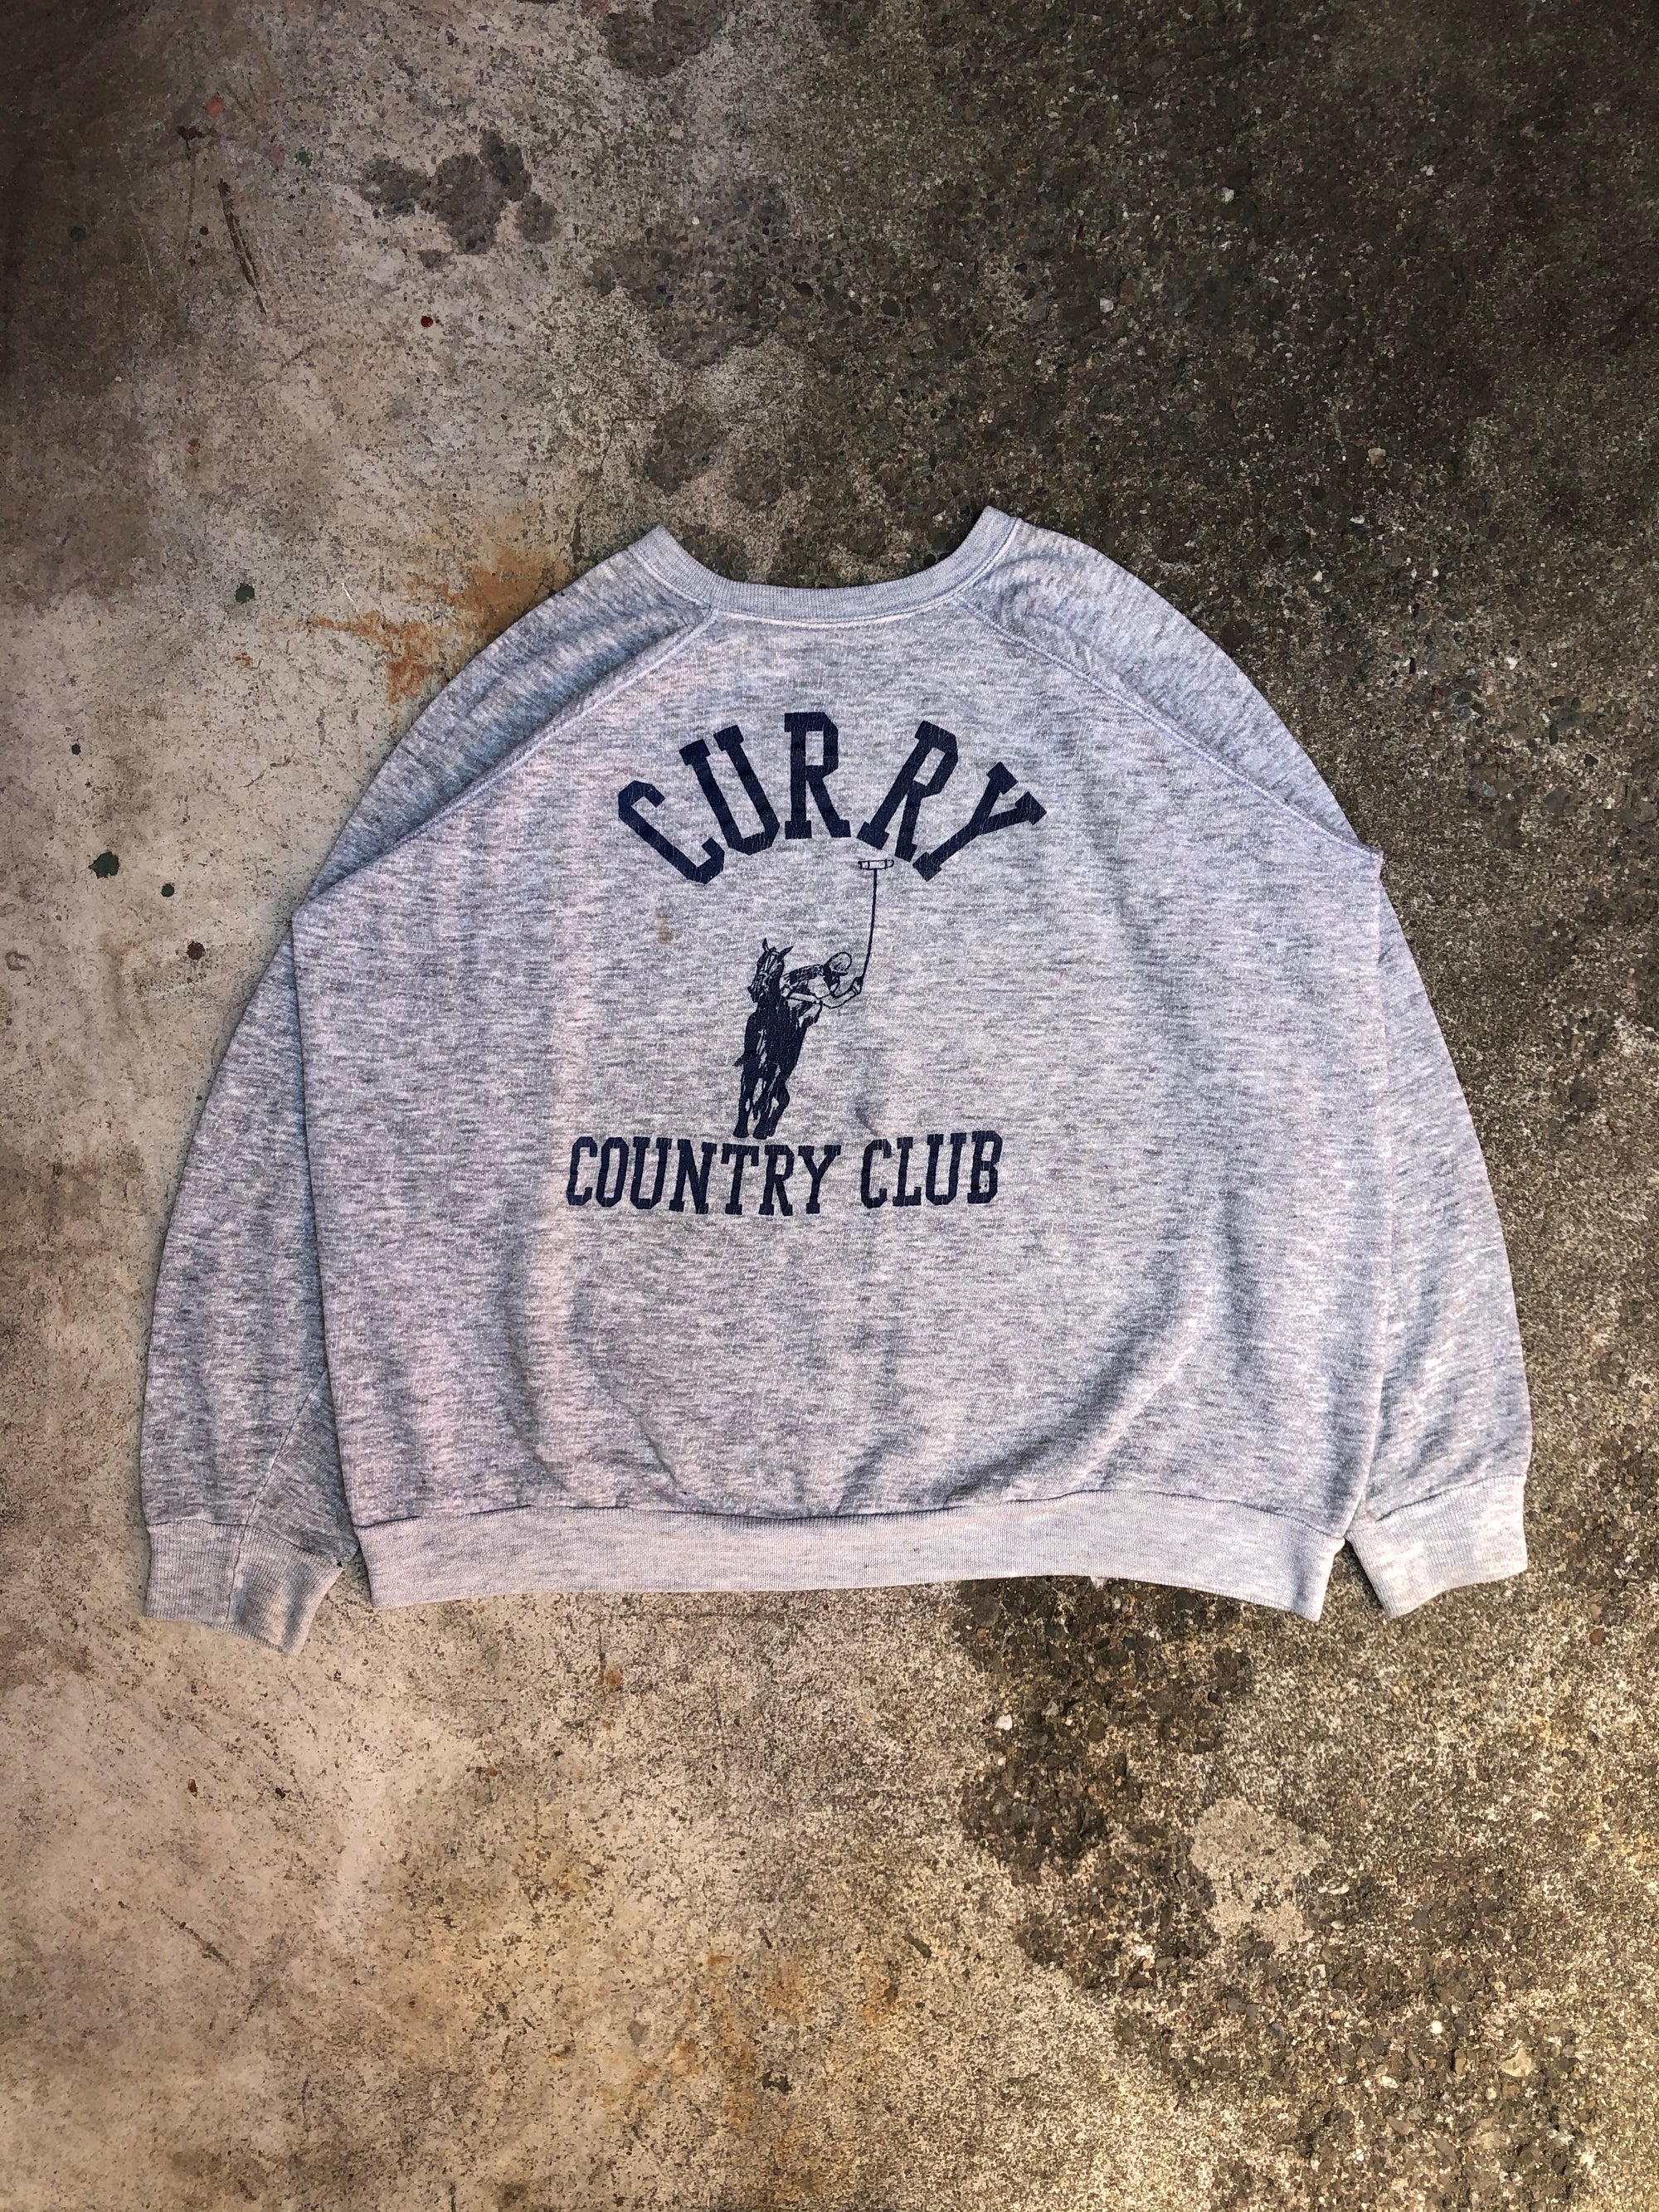 1980s Heather Grey “Curry Country Club” Raglan Sweatshirt